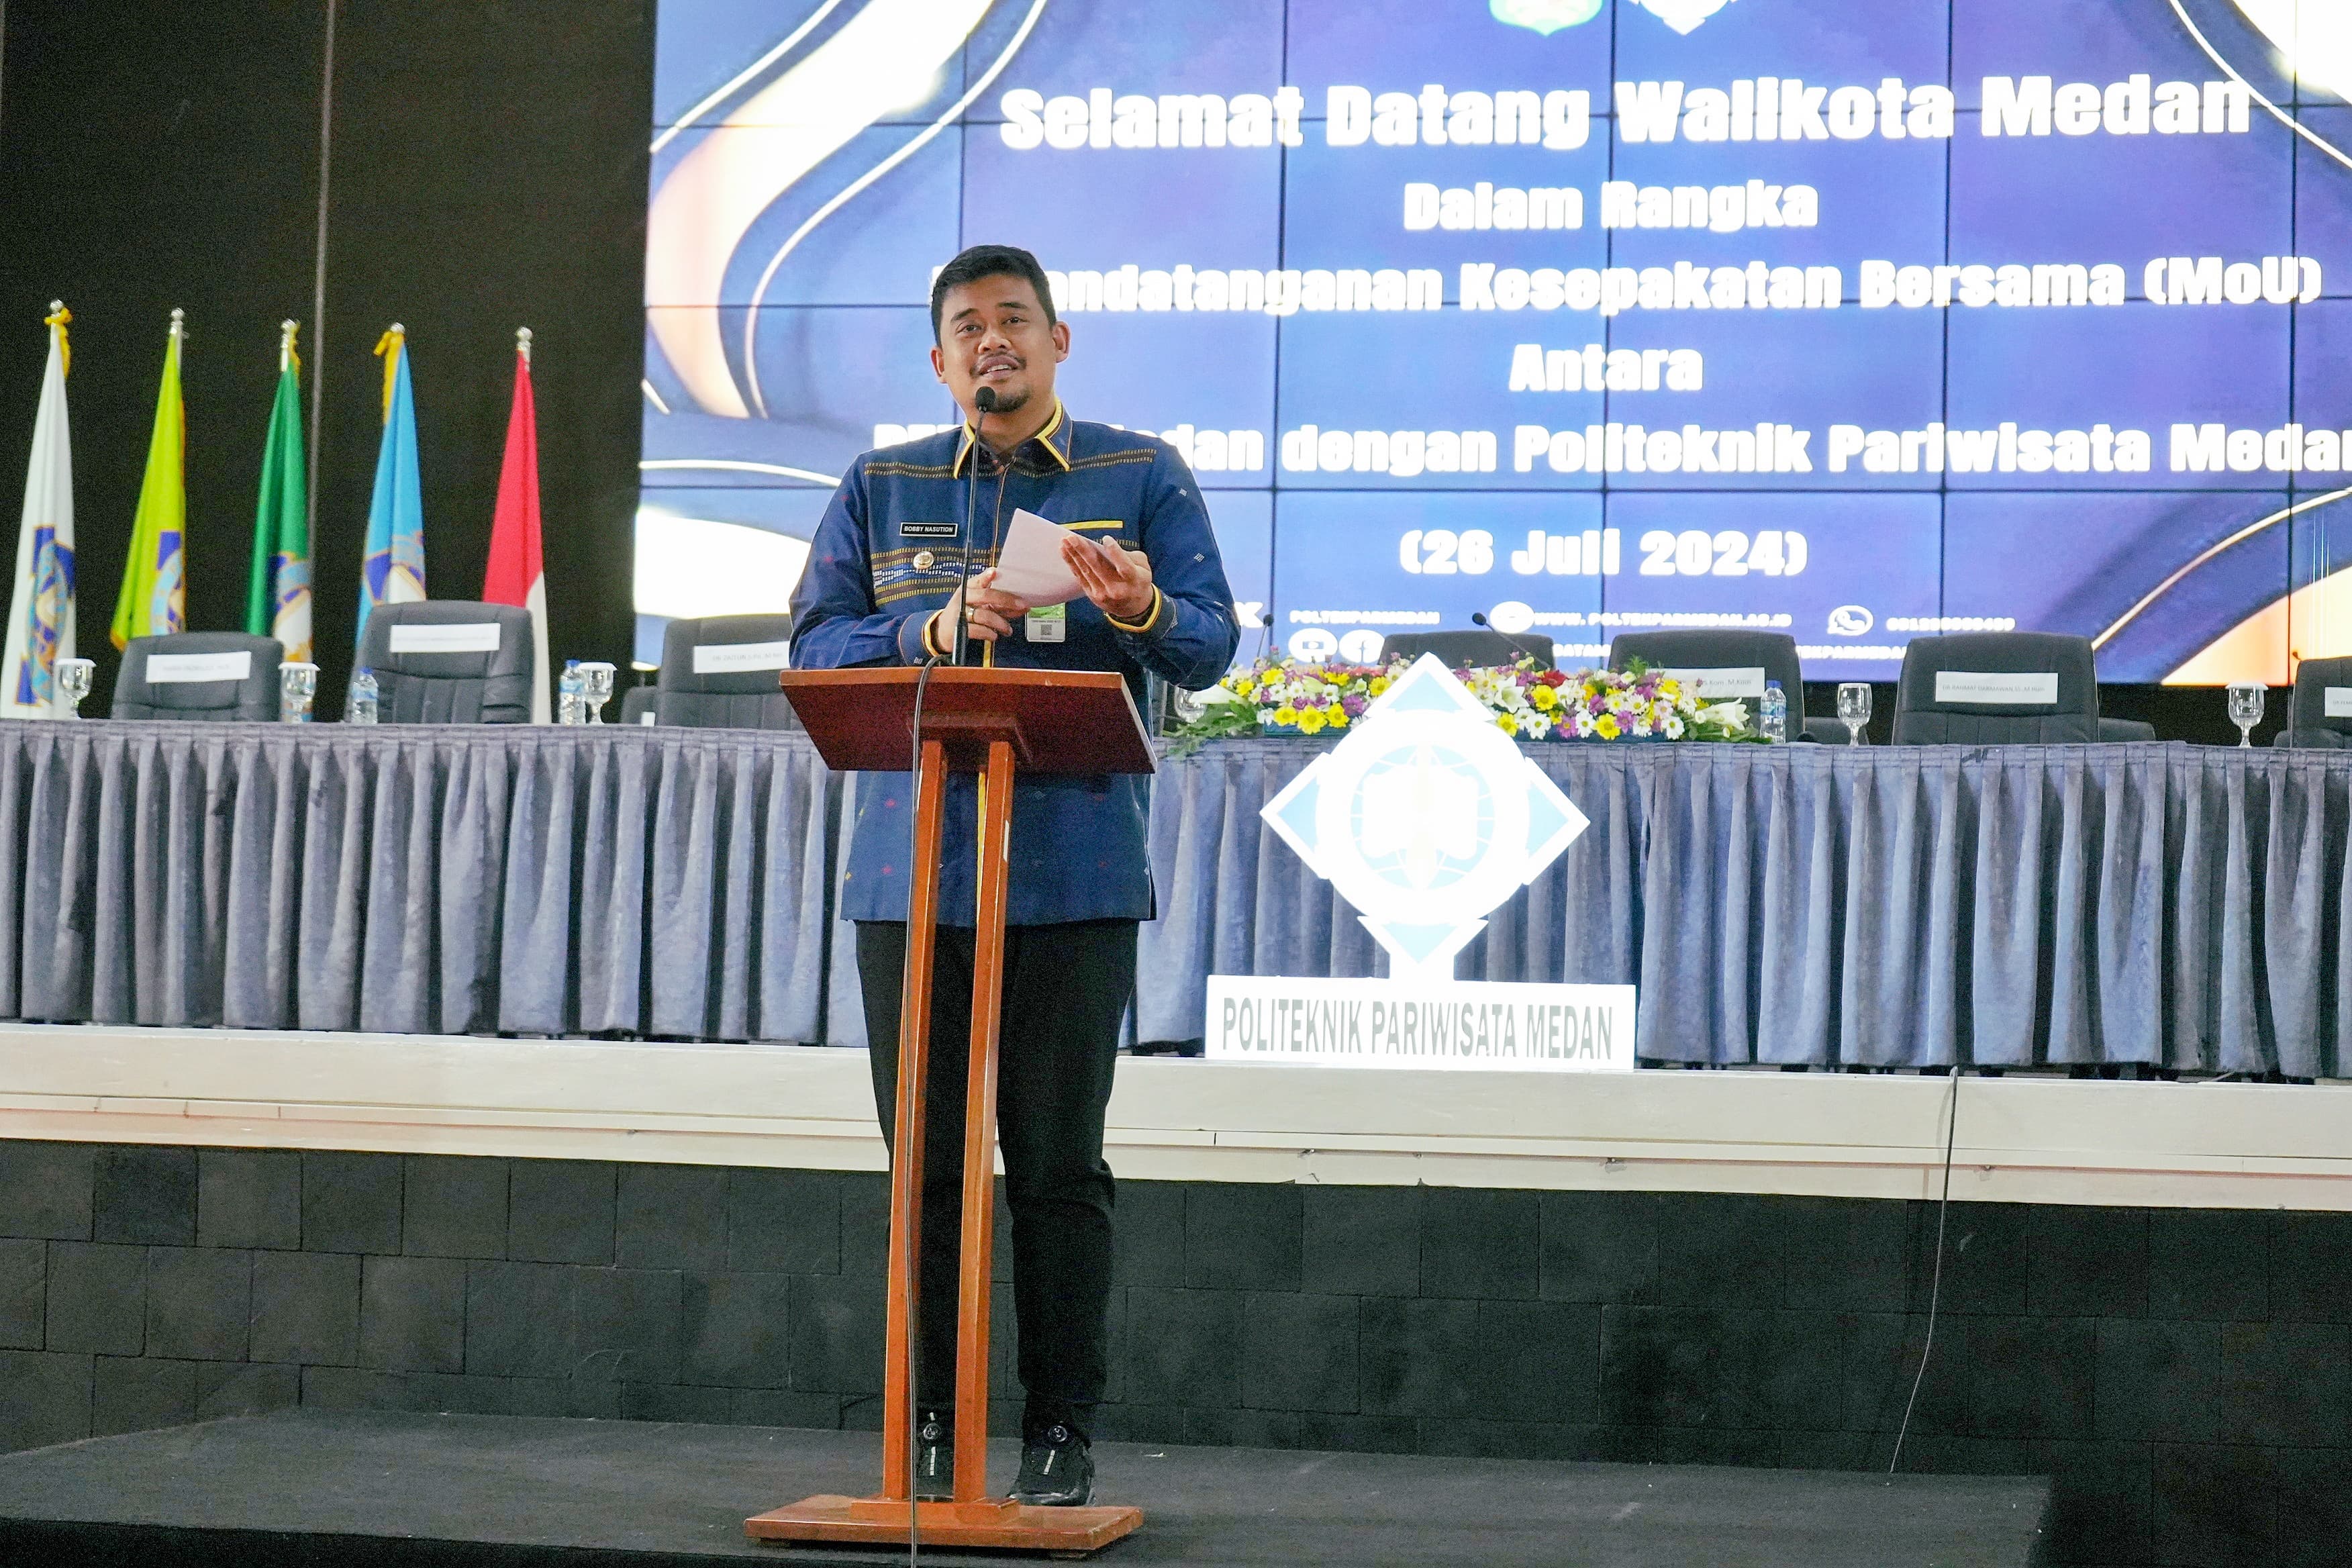 Wujudkan SDM Pariwisata Unggulan, Pemko Medan Jalin MOU Dengan Politeknik Pariwisata Medan